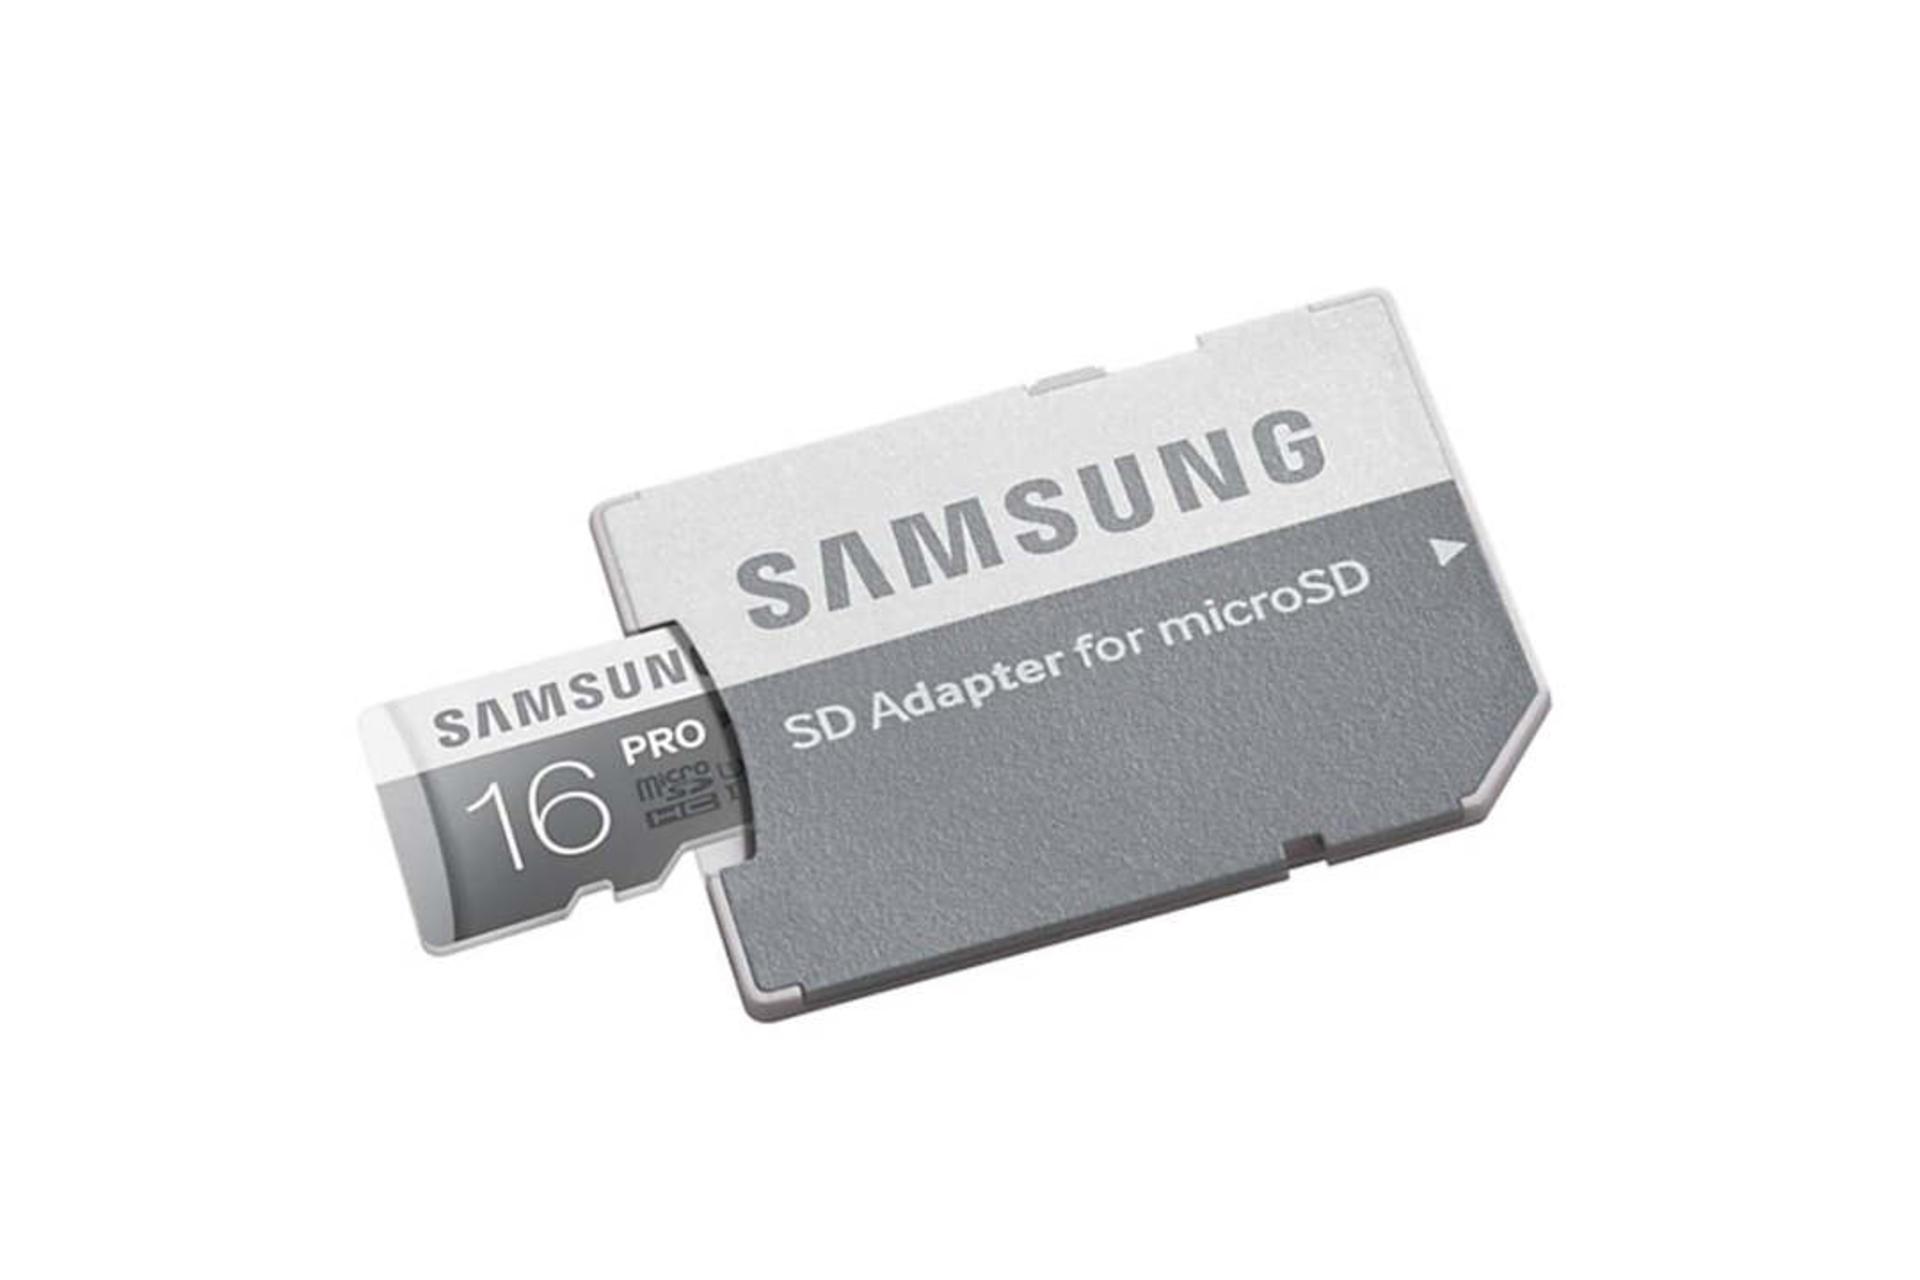 Samsung Pro microSDHC Class 10 UHS-I U1 16GB